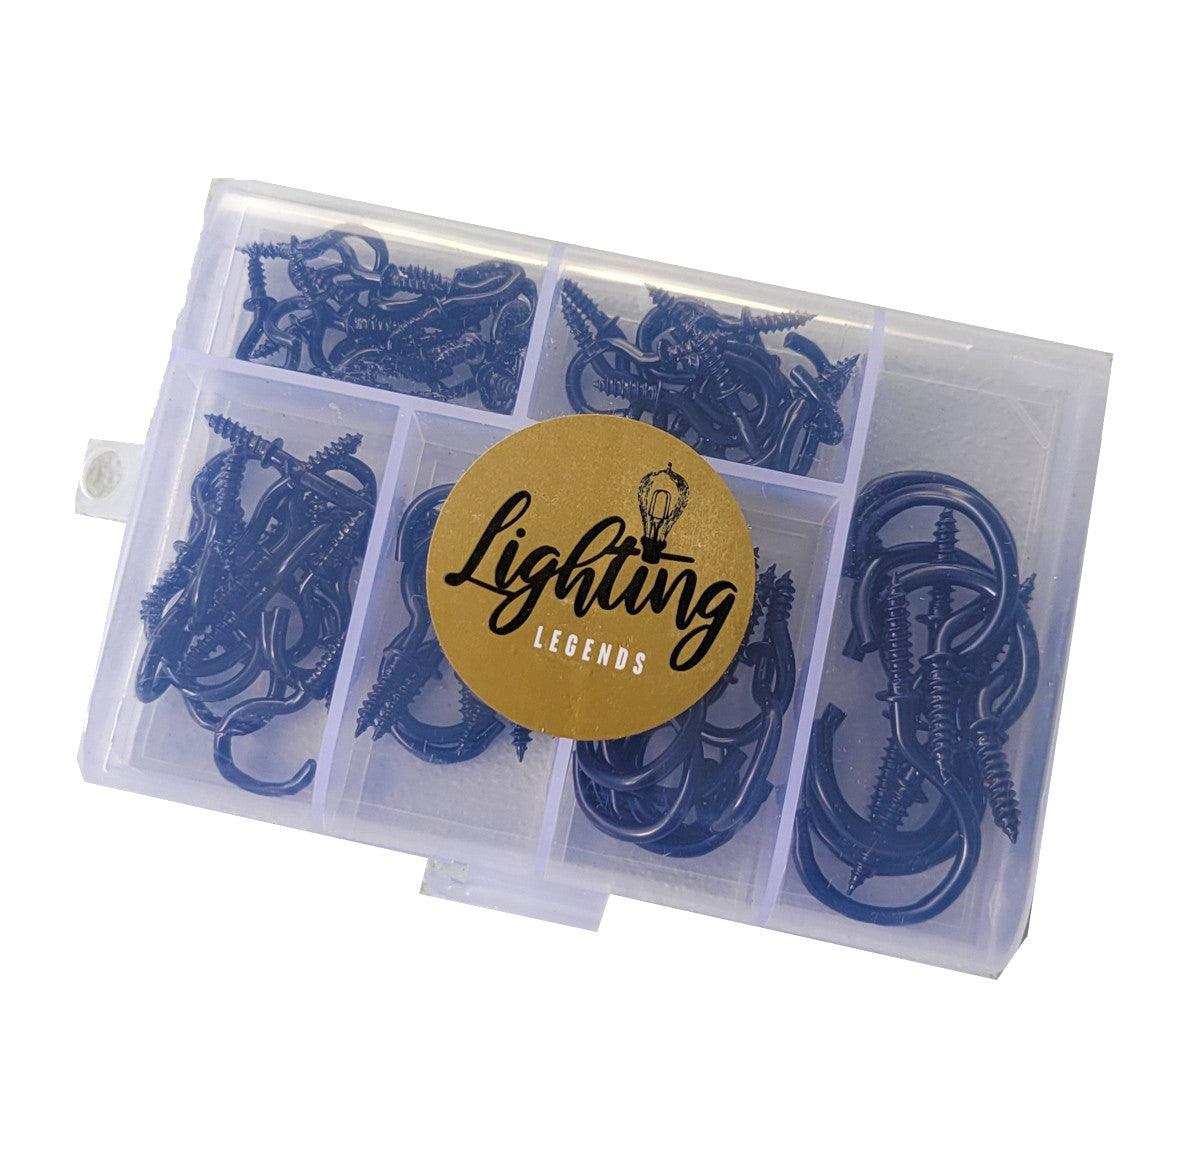 75 Pack Strong Black Screw Hooks - Ideal for String Lights - Lighting Legends